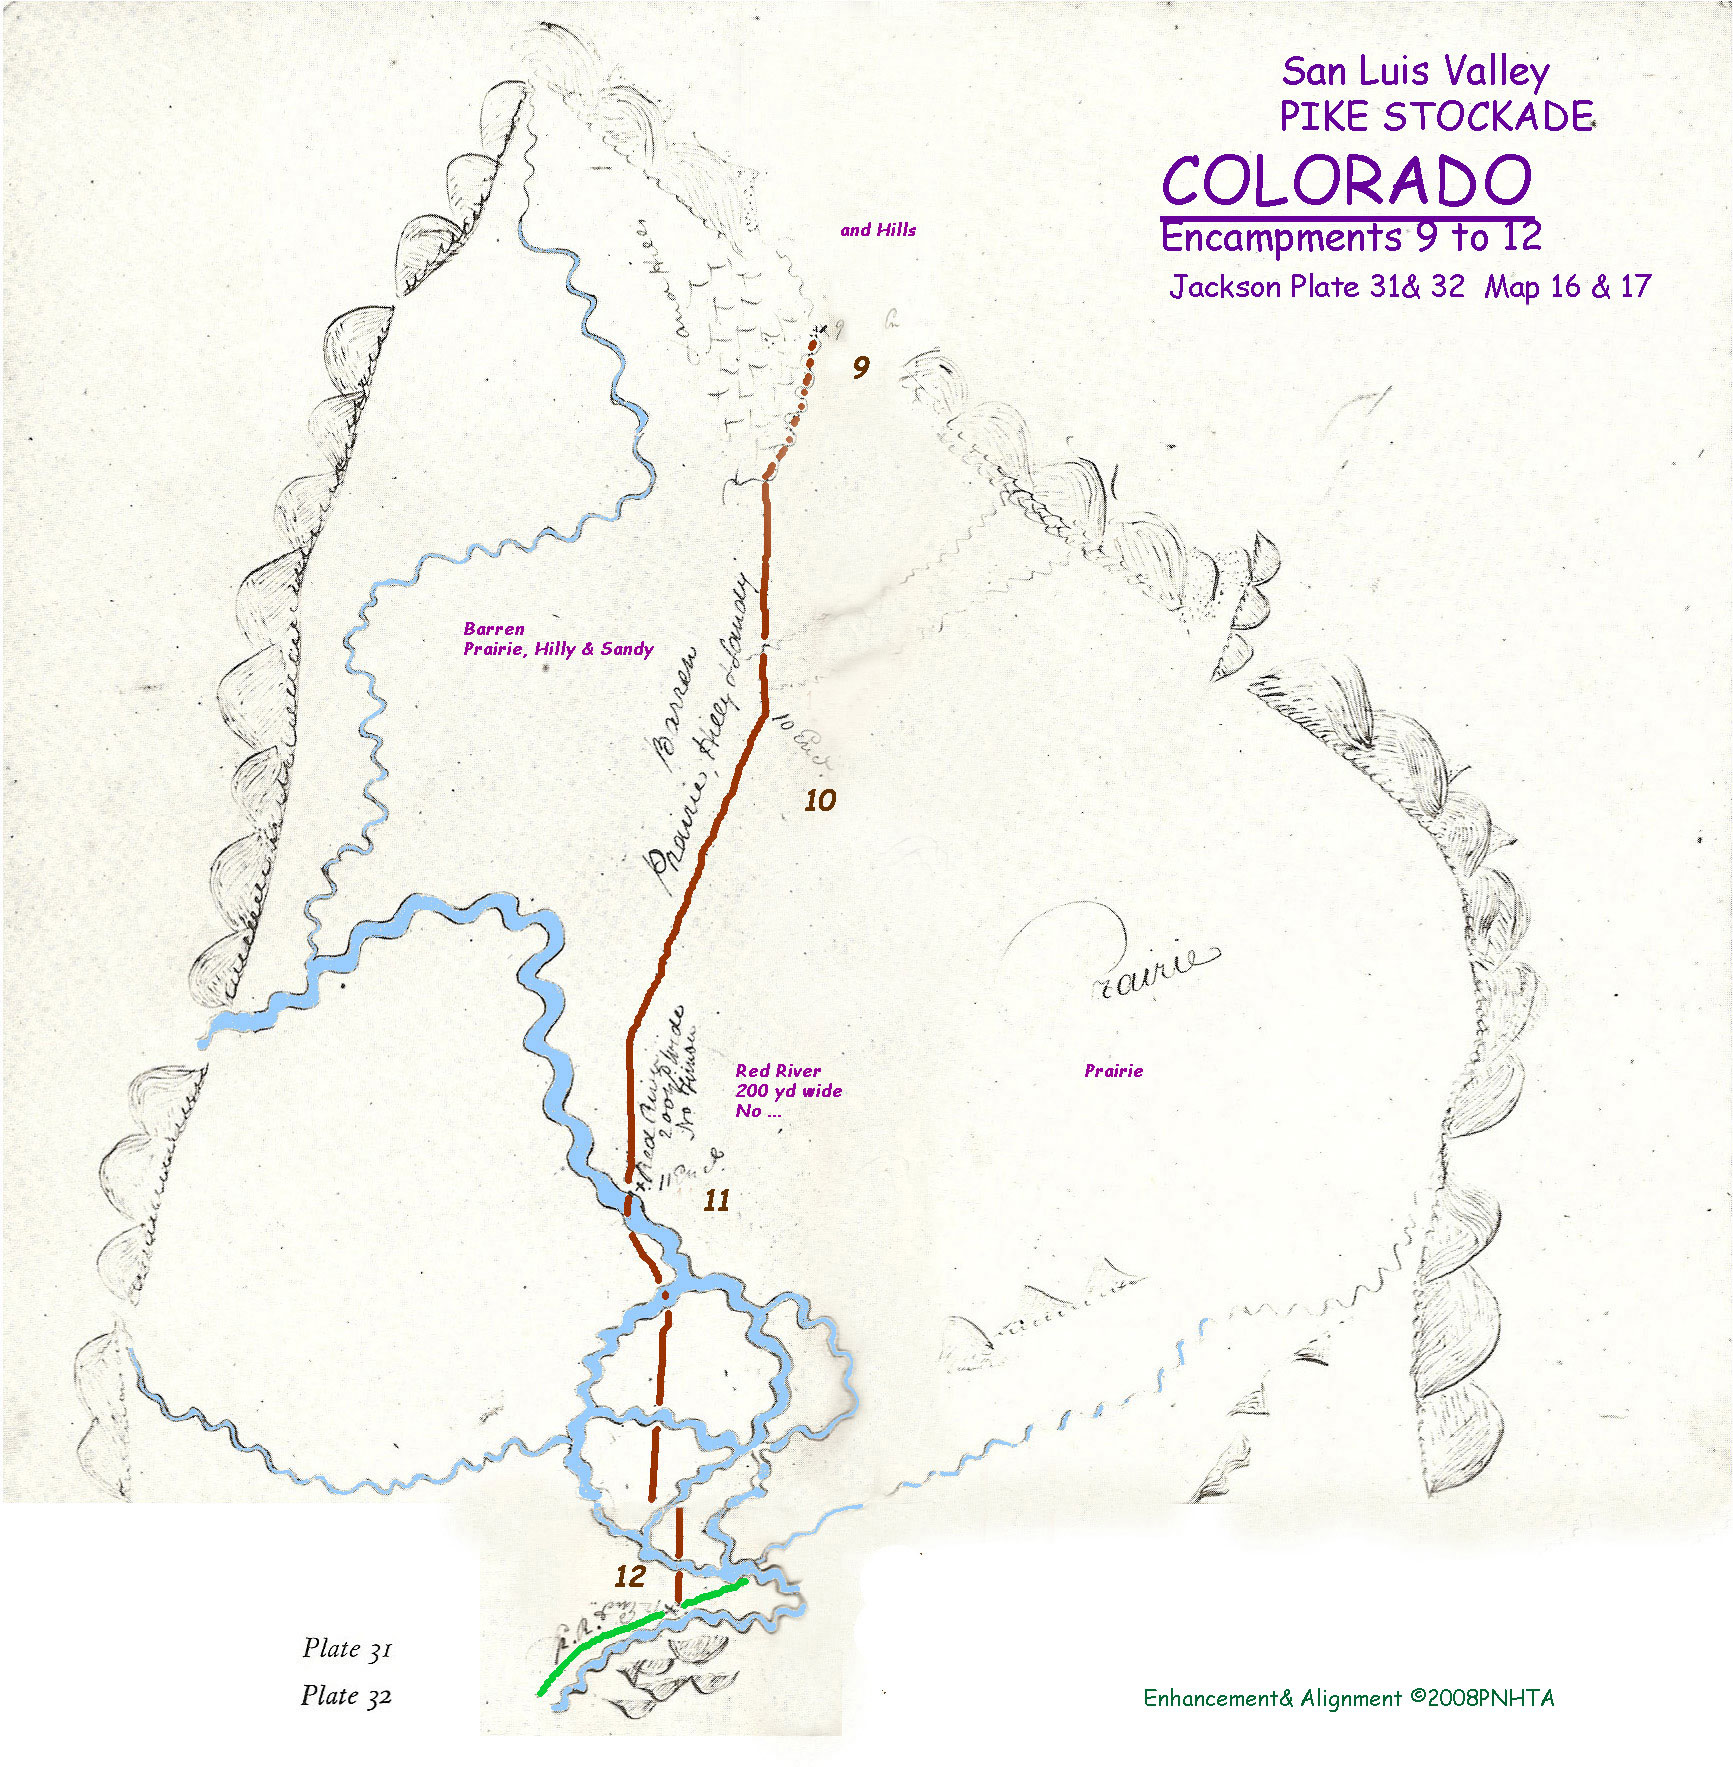 Map 16 (Field 31-2)- San Luis Valley to the Stockade (Jackson Plates 31 & 32)